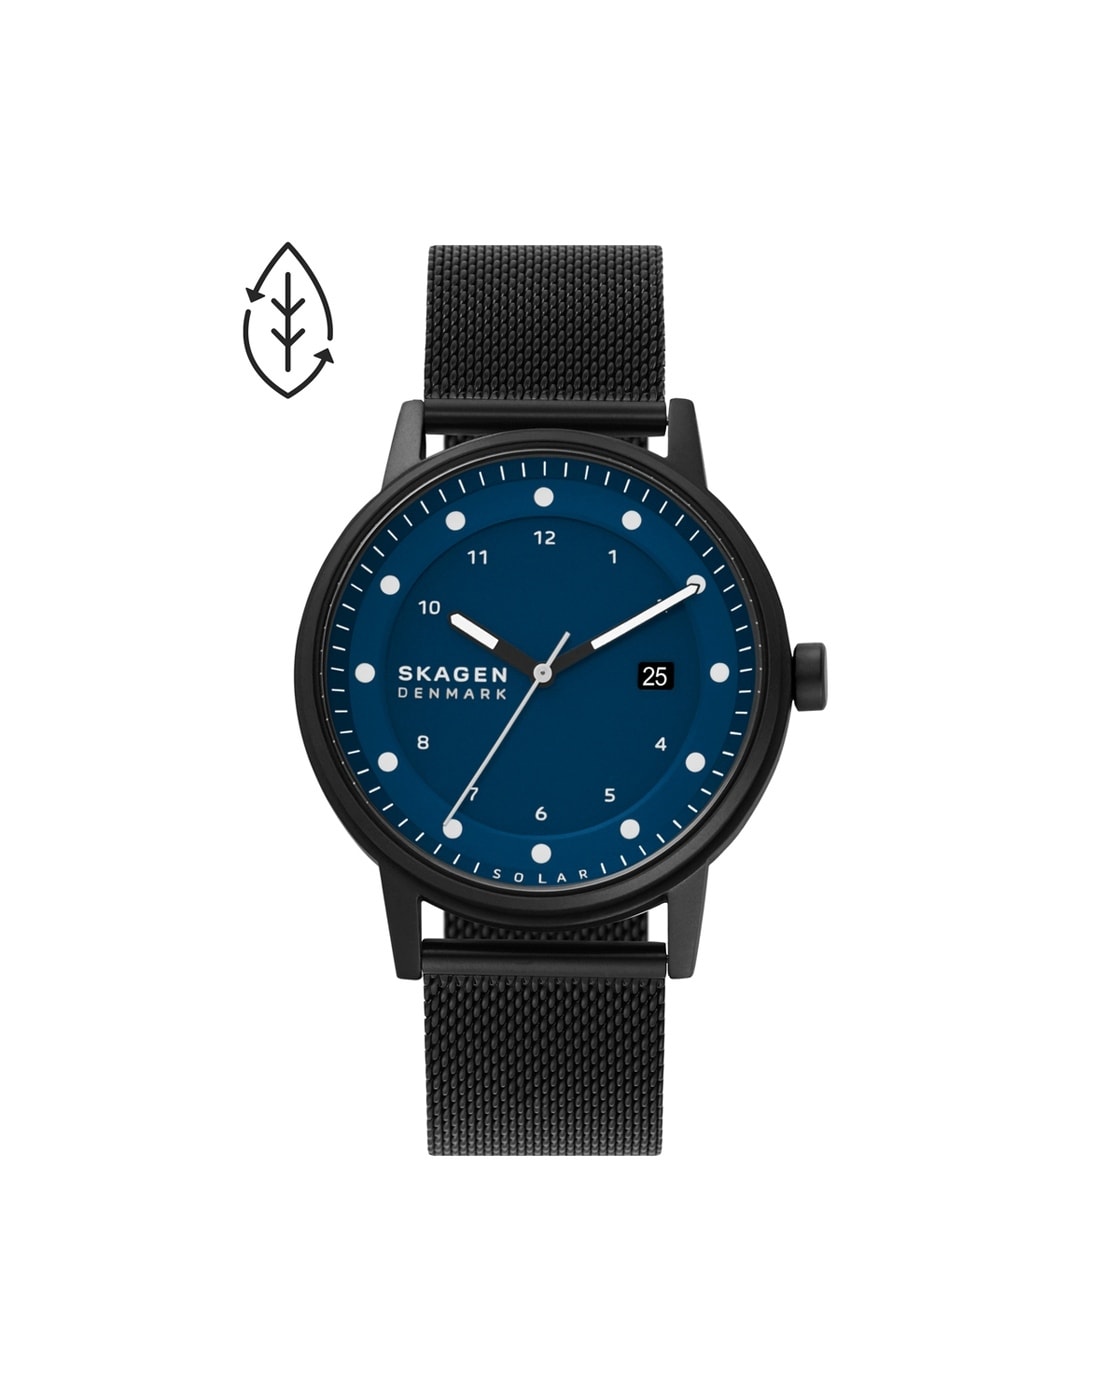 Shop For Skagen Watches For Men & Women | Rama Watch